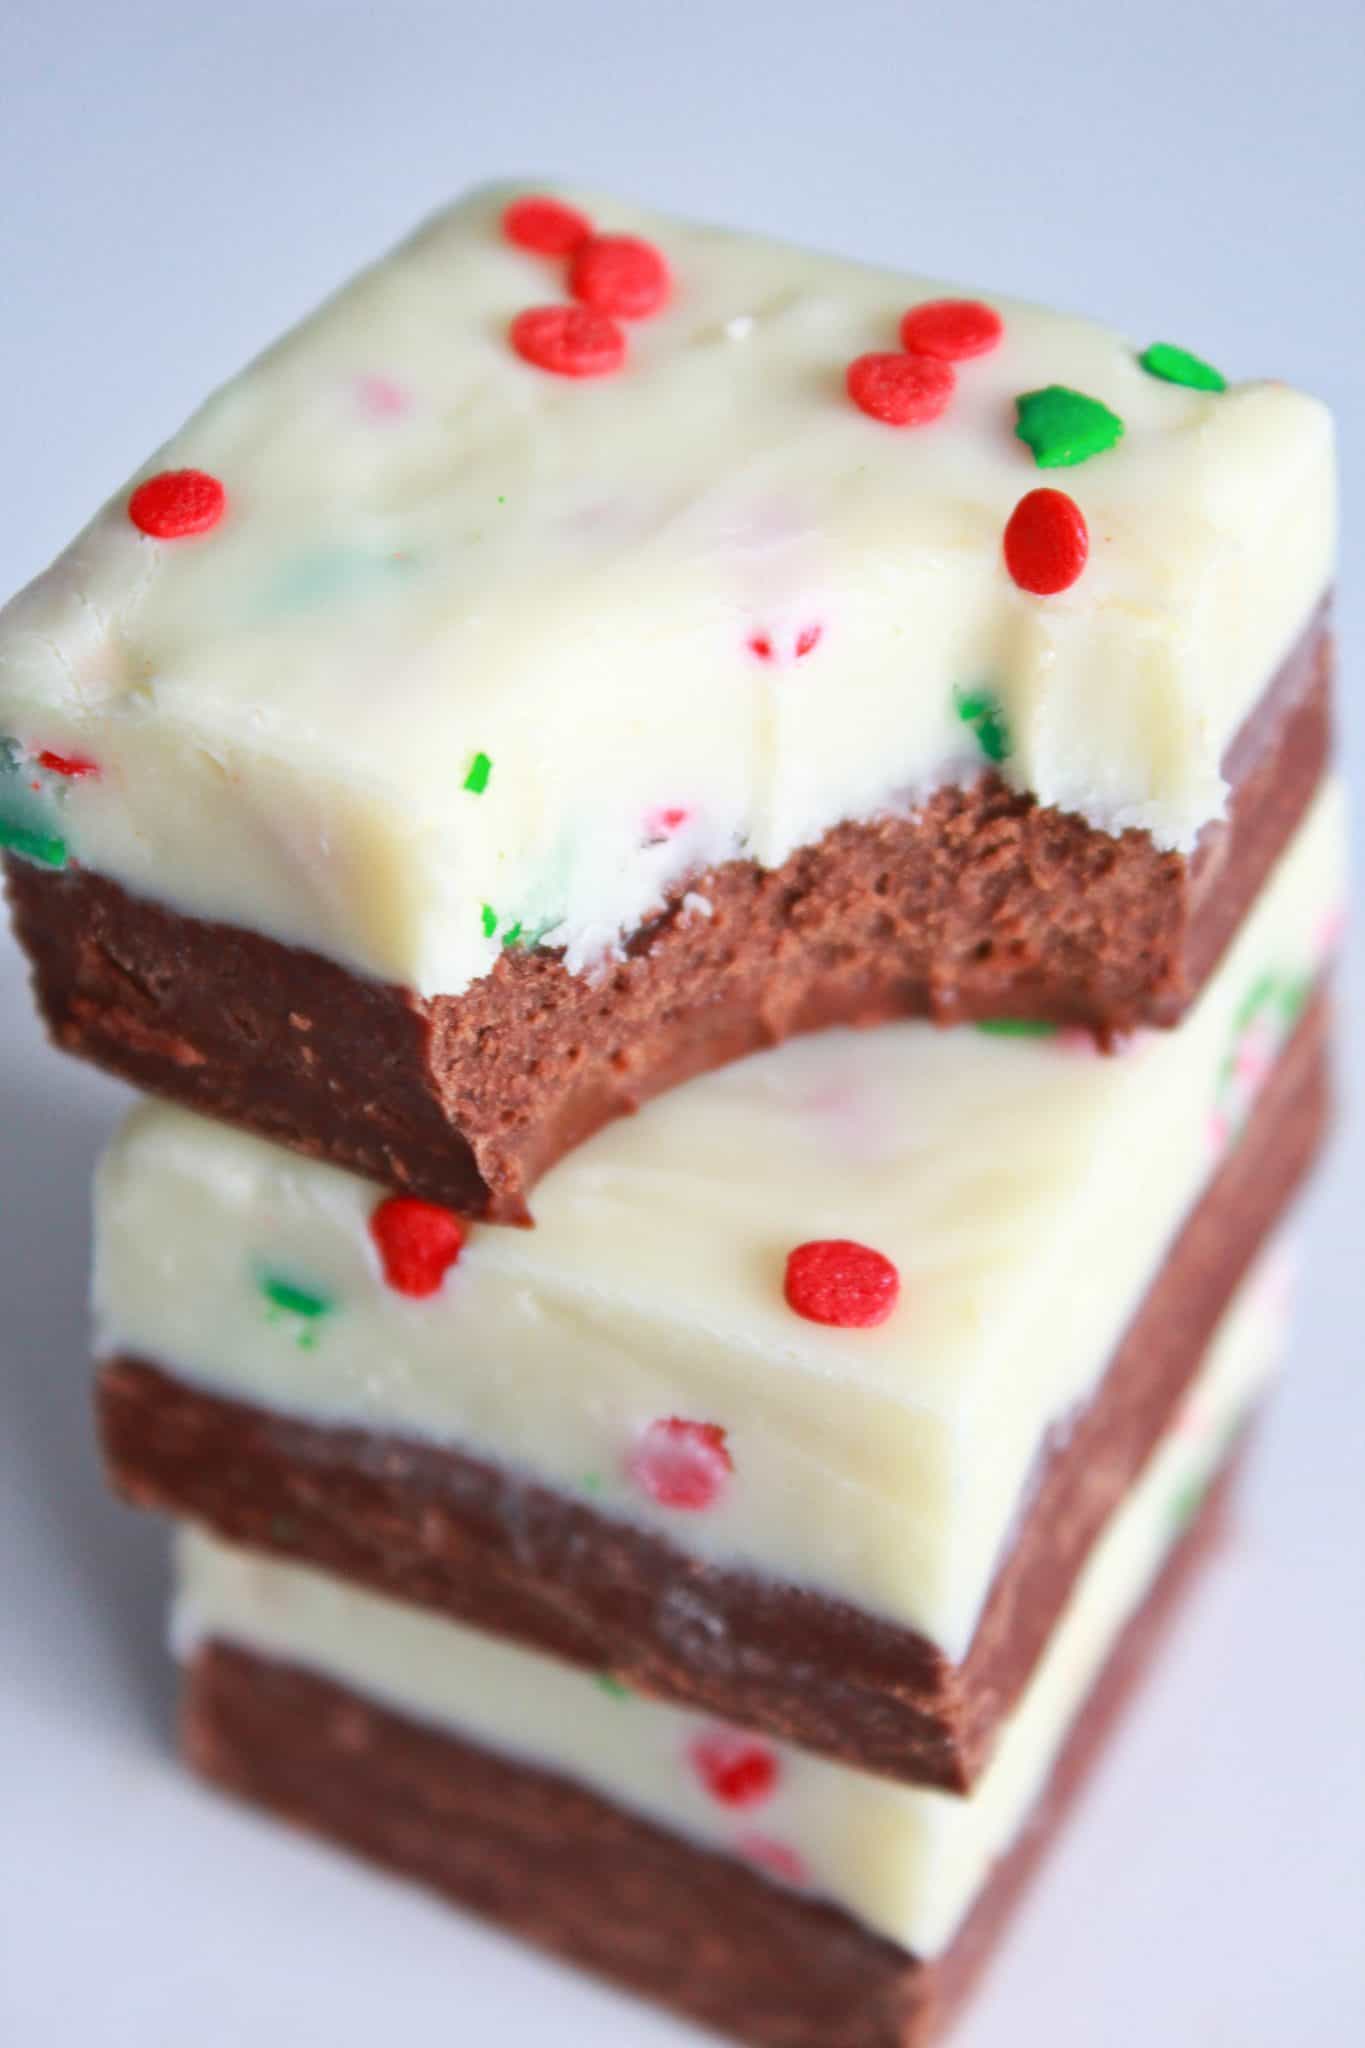 Best No Bake Christmas Desserts by top US dessert blogger, Practically Homemade